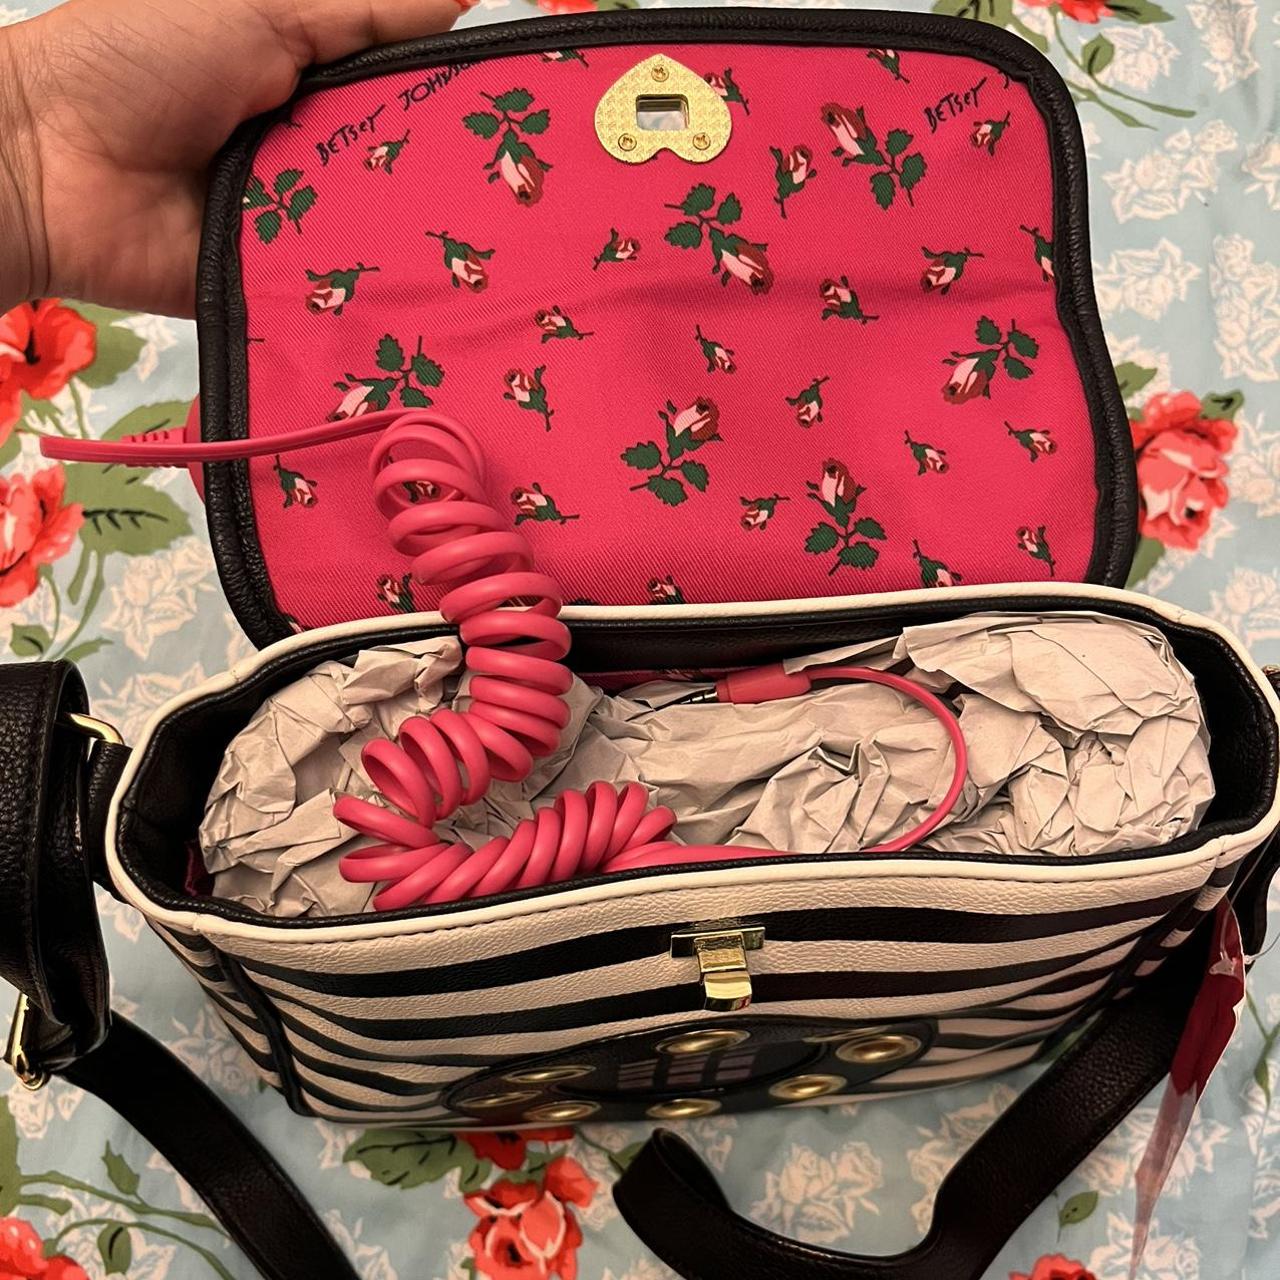 Pin by Lauravaleriamu on Creatividad | Betsey johnson phone purse, Unusual  handbags, Cross shoulder bags